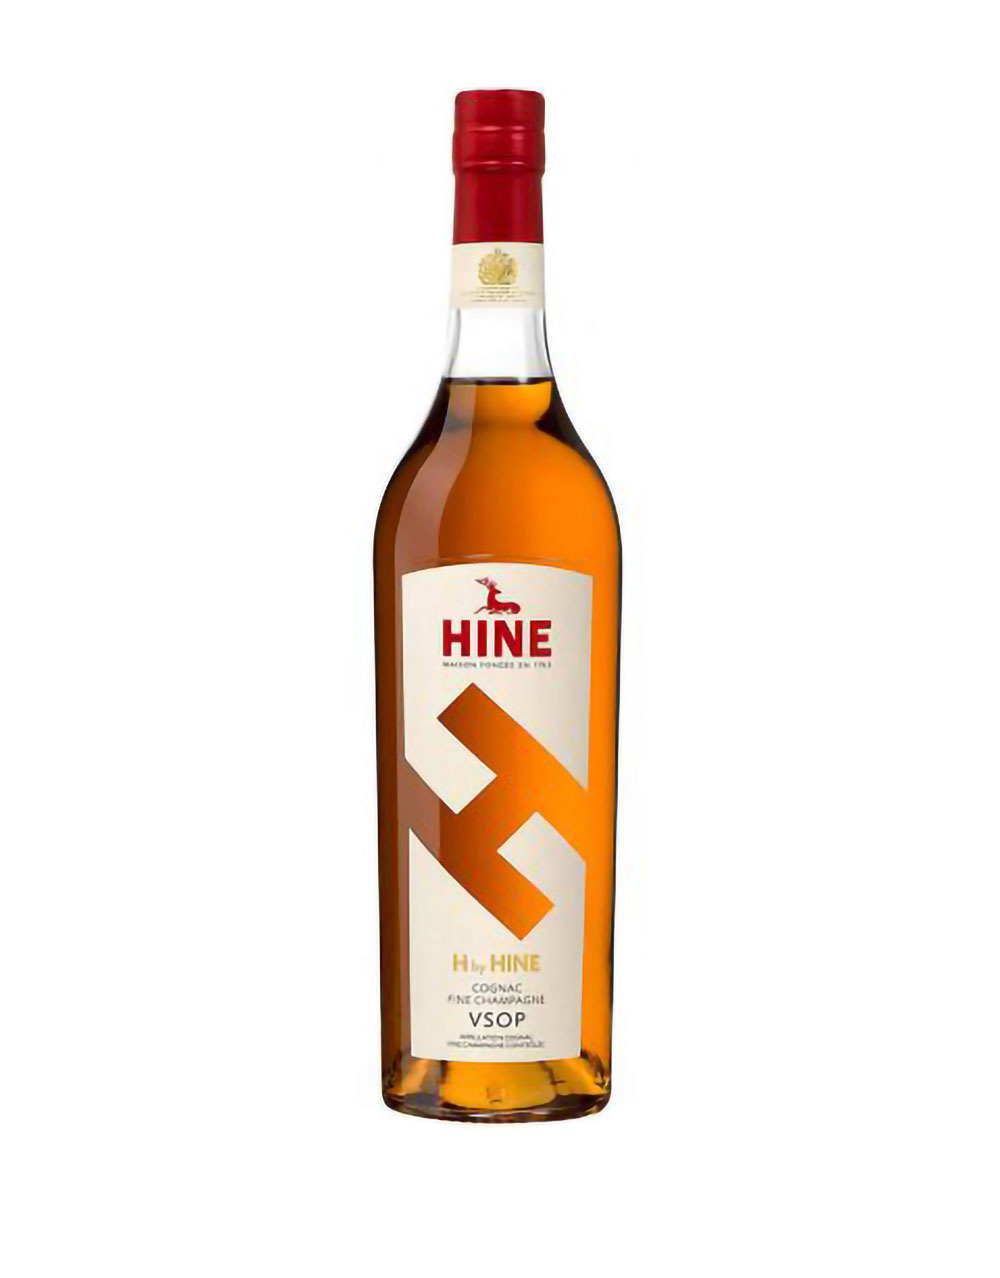 H by Hine VSOP Fine Champagne Cognac